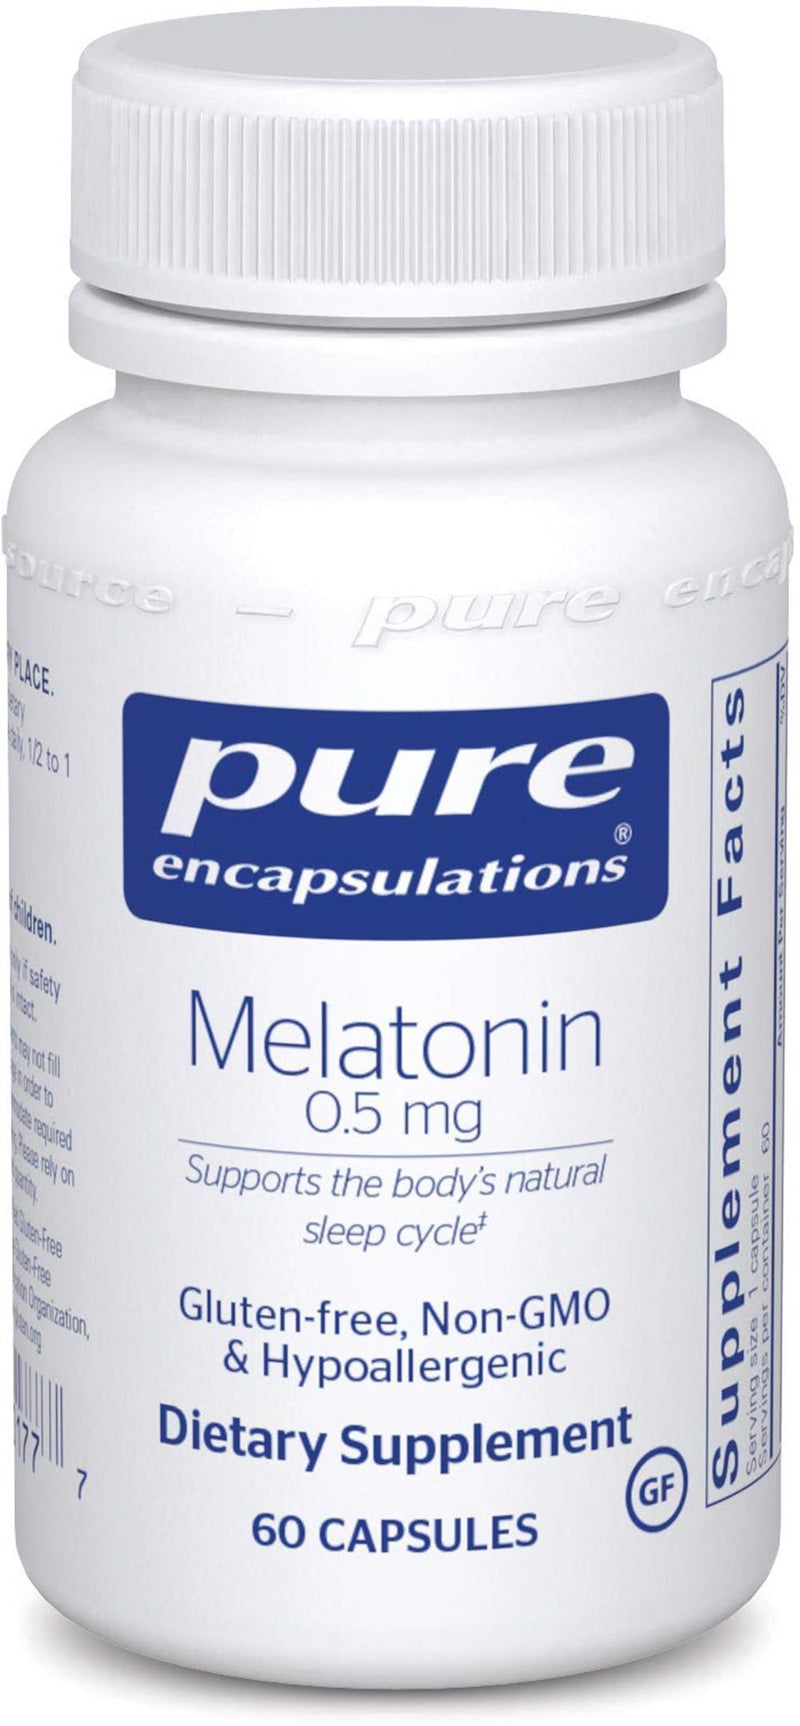 Pure Encapsulations Melatonin 0.5 mg -- 60 Capsules